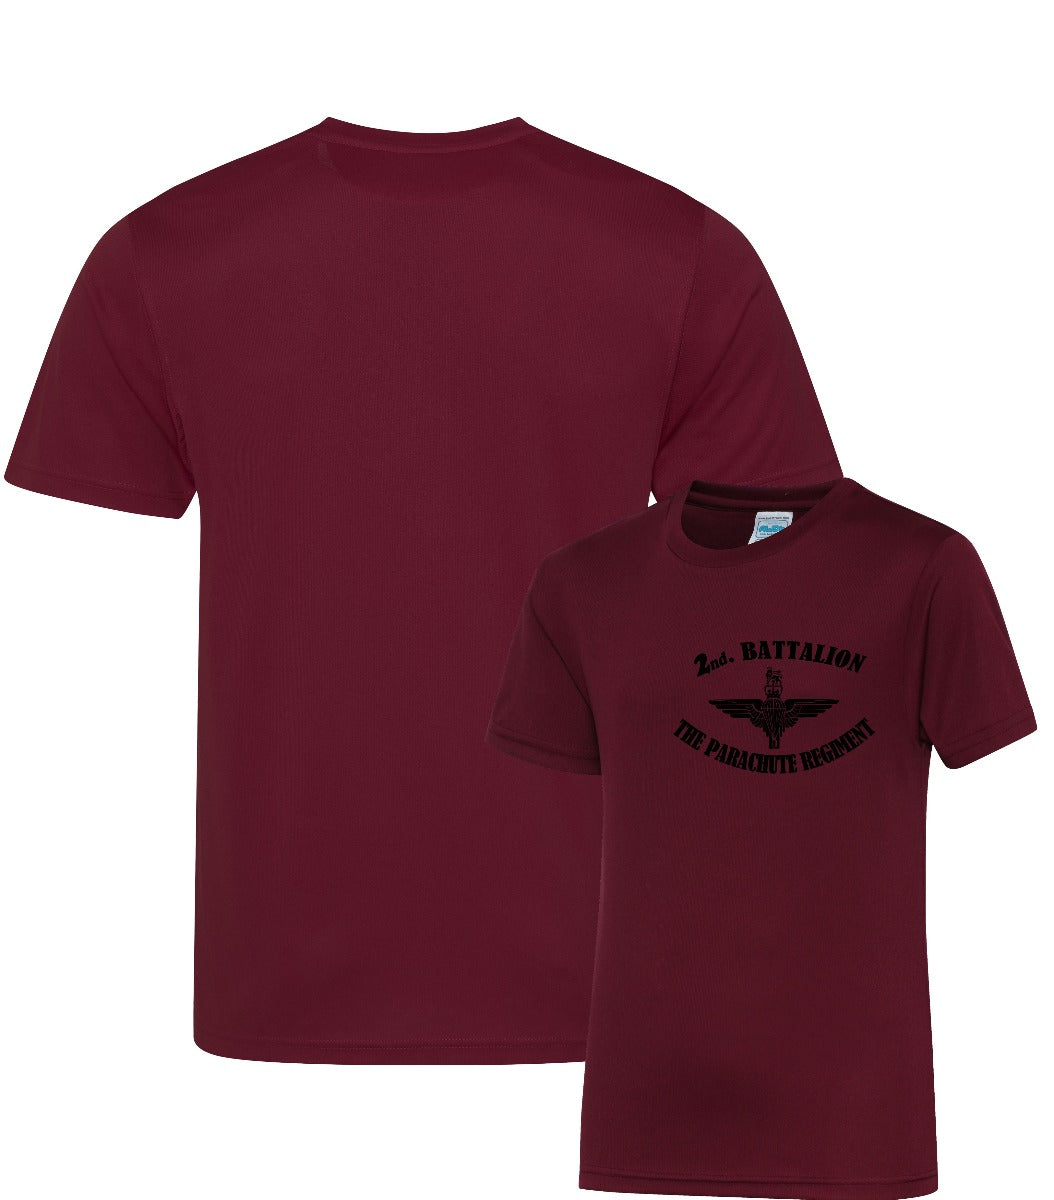 Double Printed 2nd Battalion Parachute Regiment Wicking T-Shirt